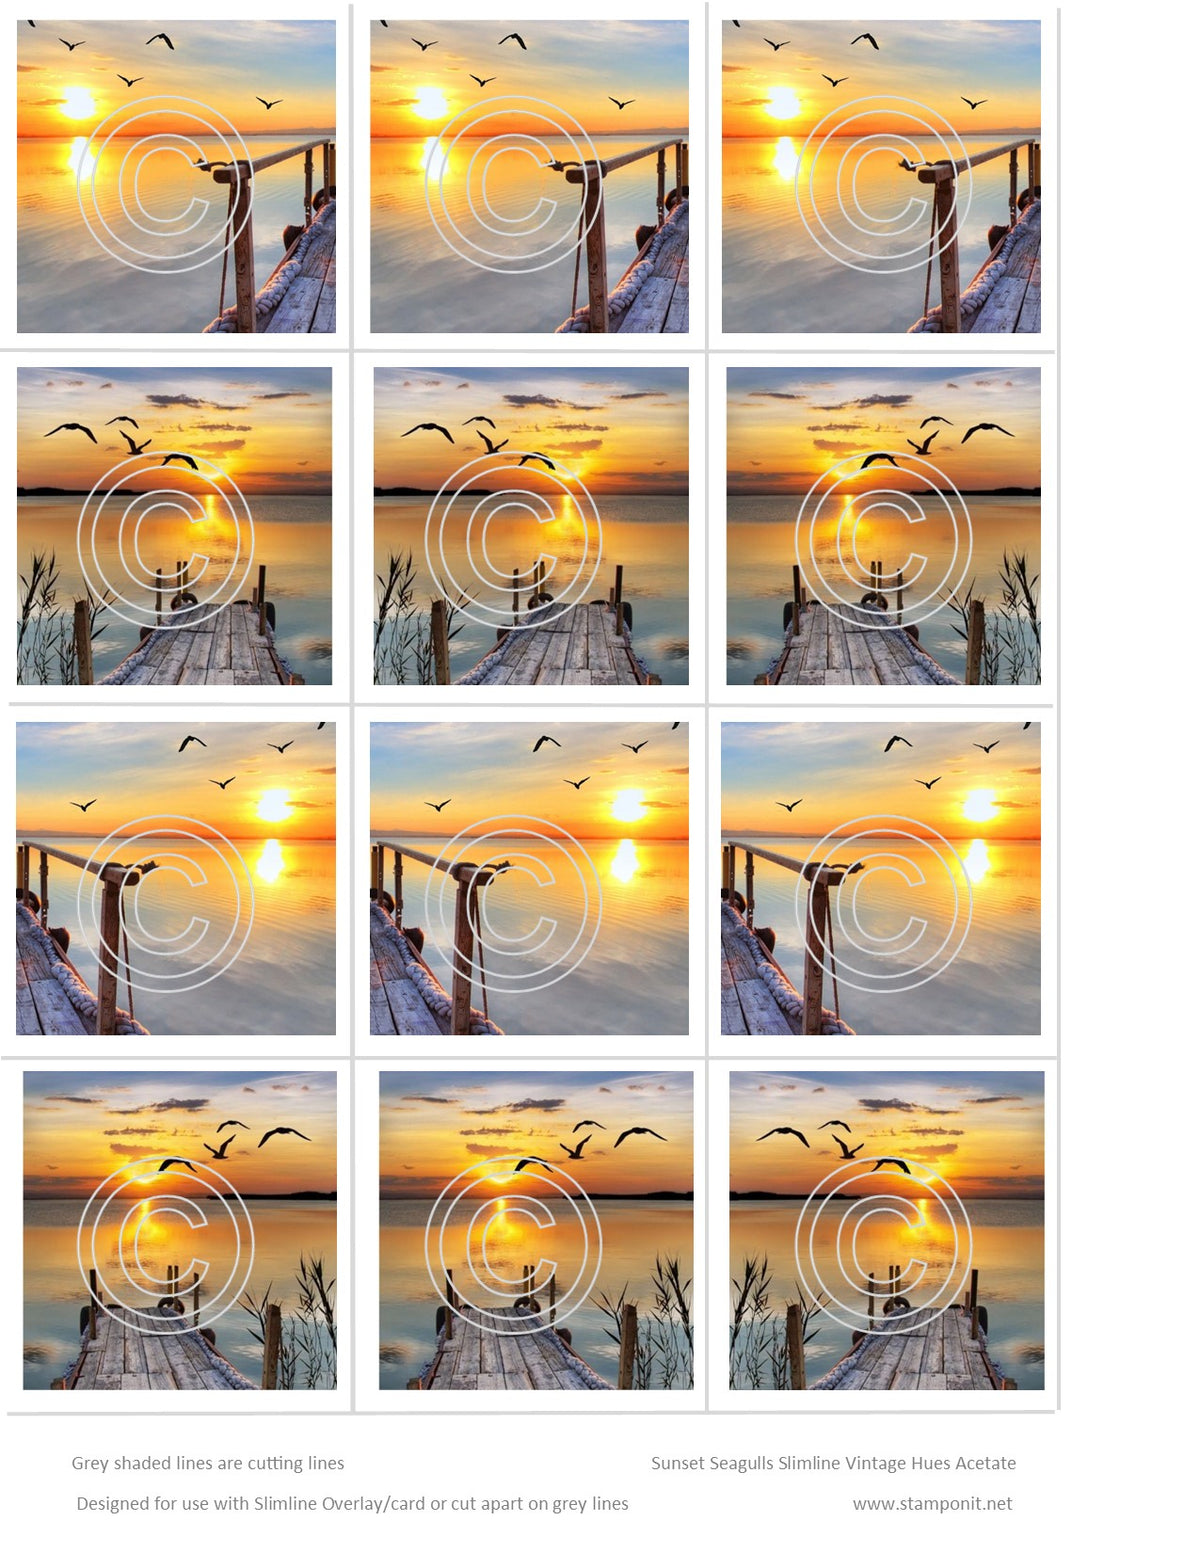 Sunset Seagulls Slimline full sheet Vintage Hue Acetate